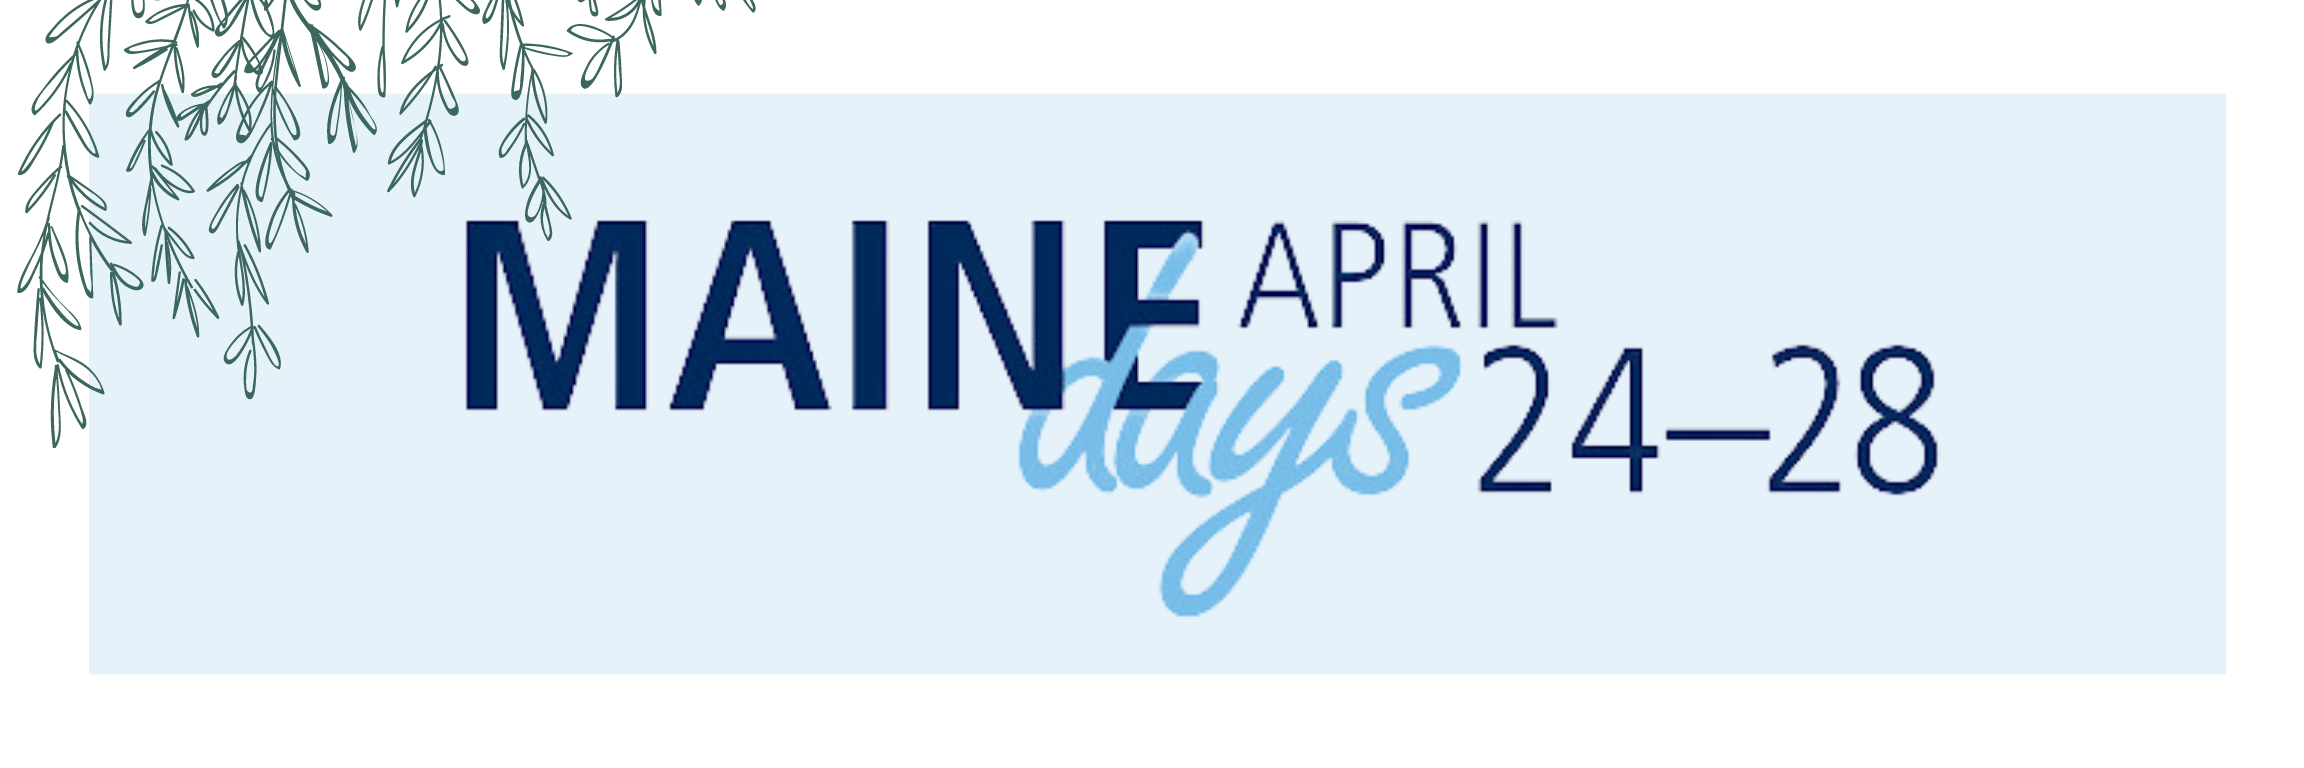 Maine Days April 2428, 2023 University of Maine